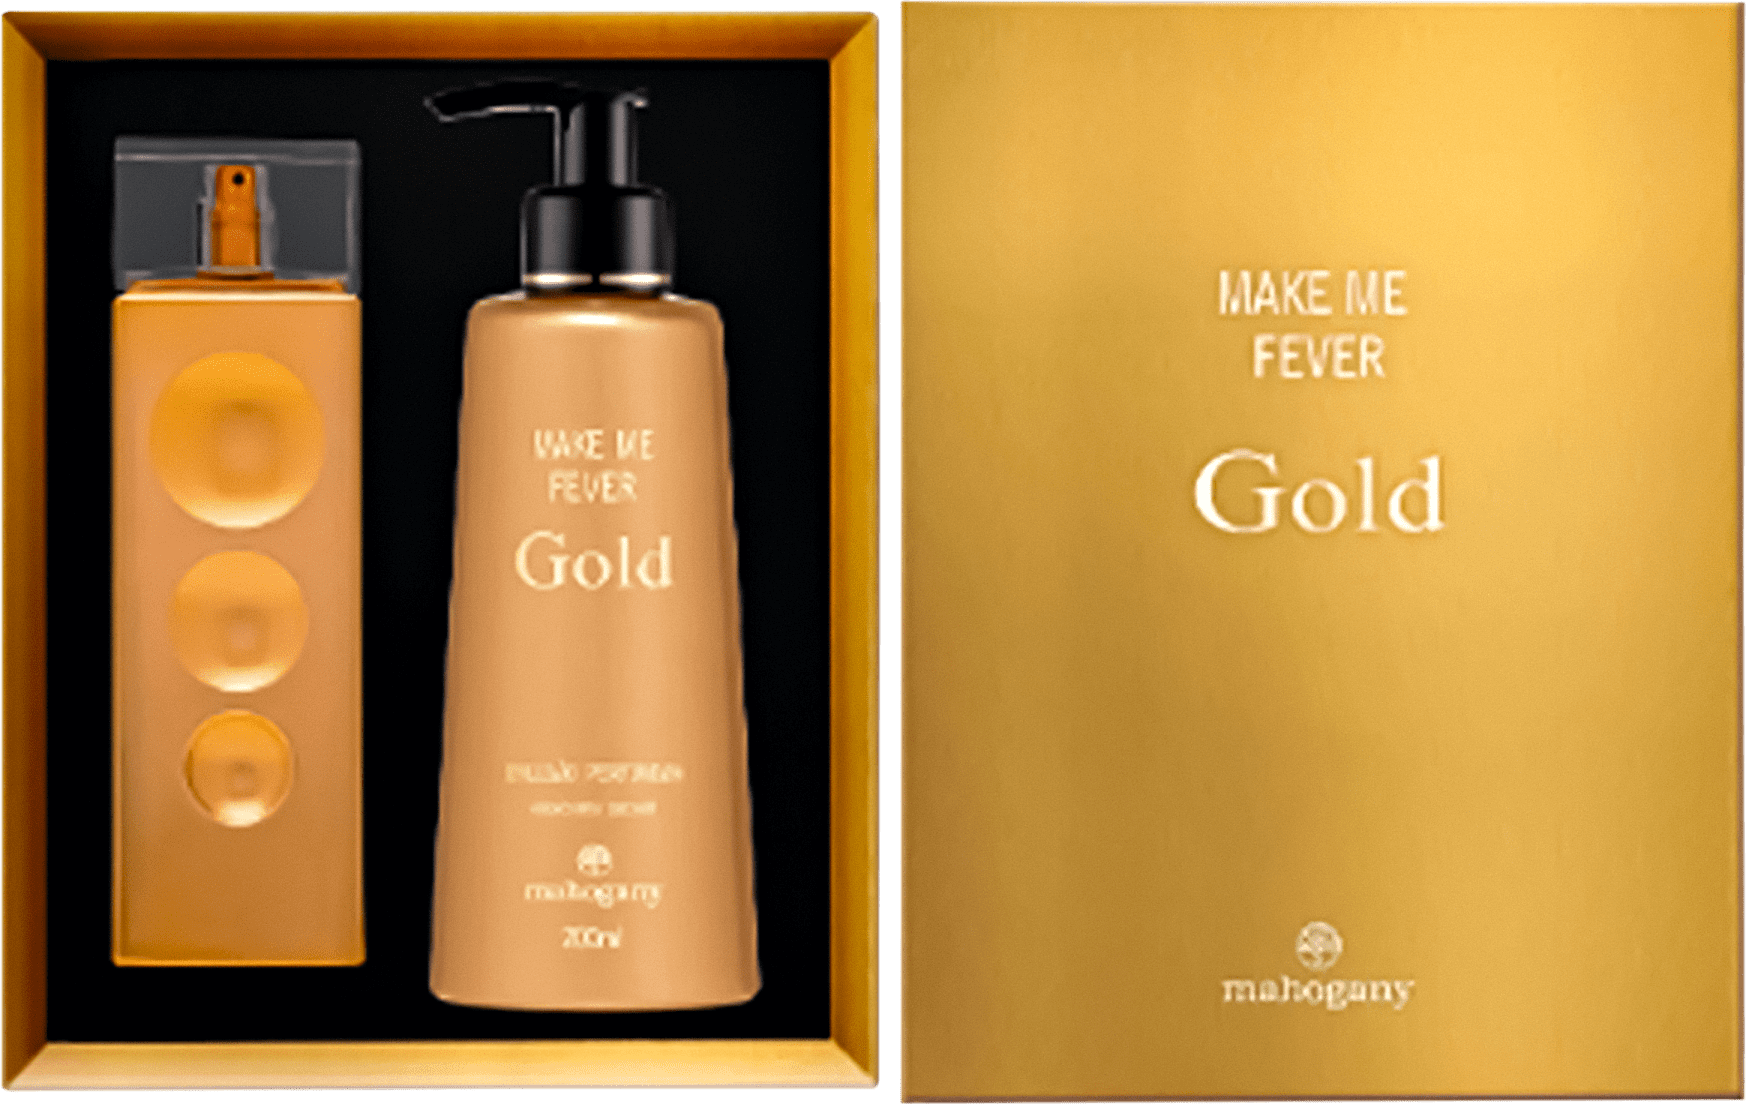 alfaparf gold fever szampon